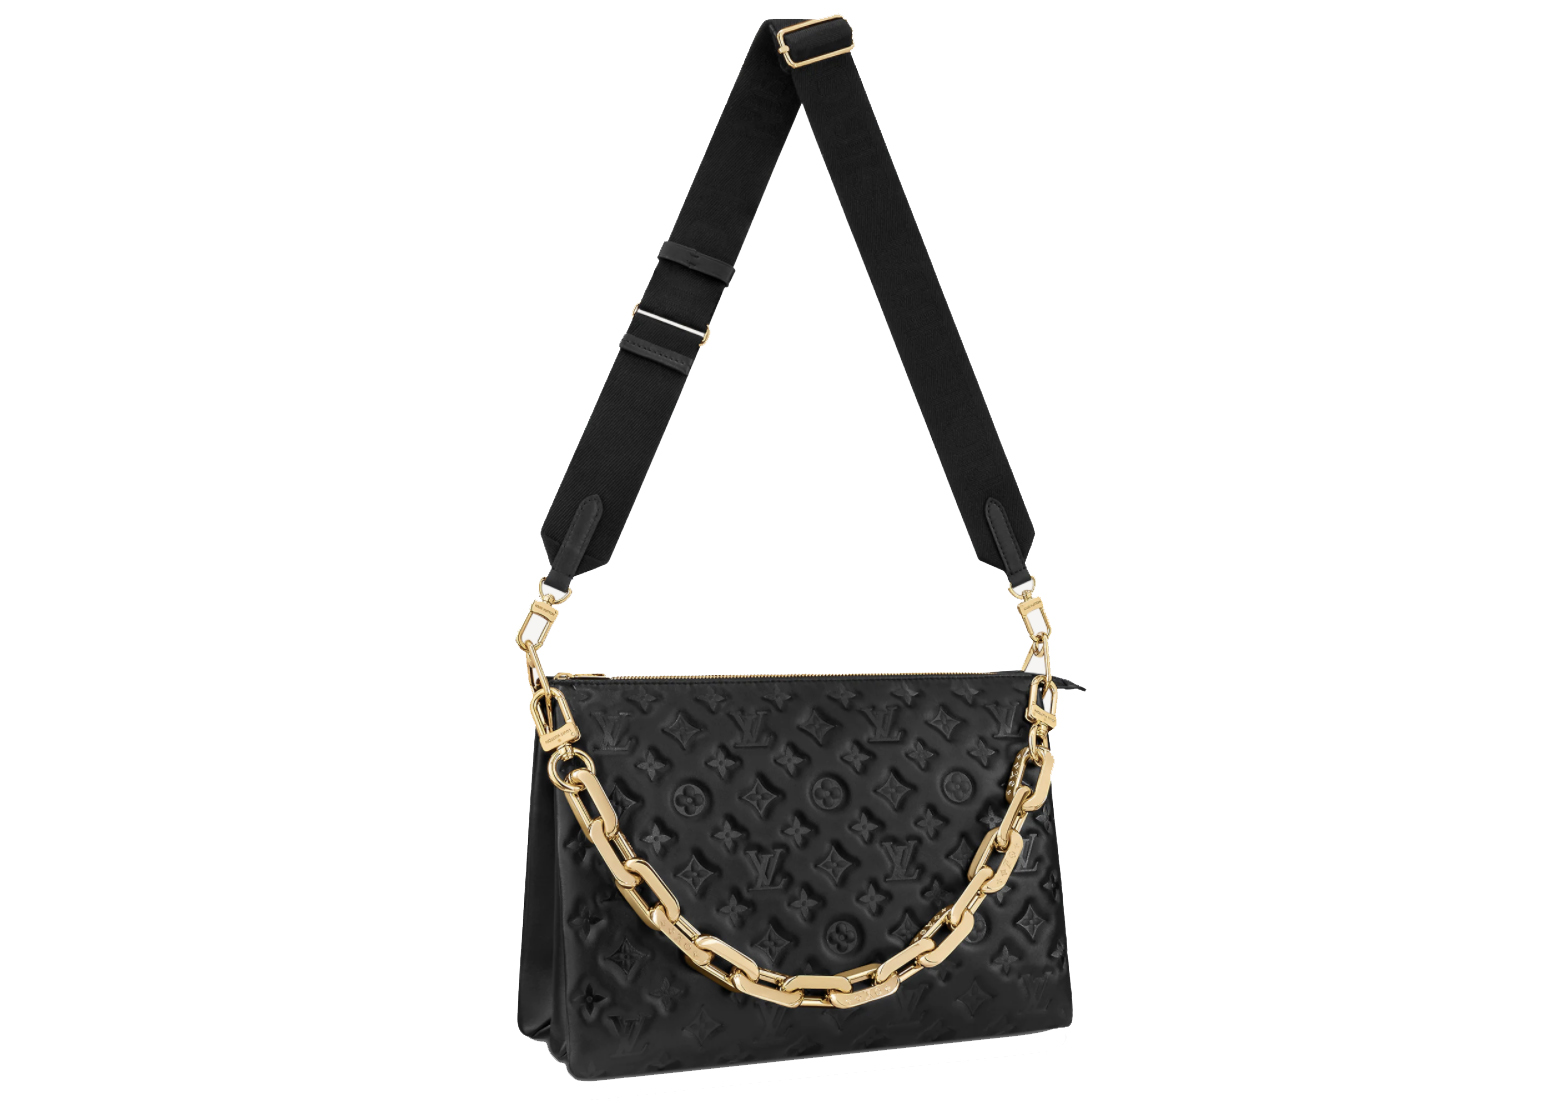 Buy Louis Vuitton Black Patent Coussin Bag (With Box) - Online